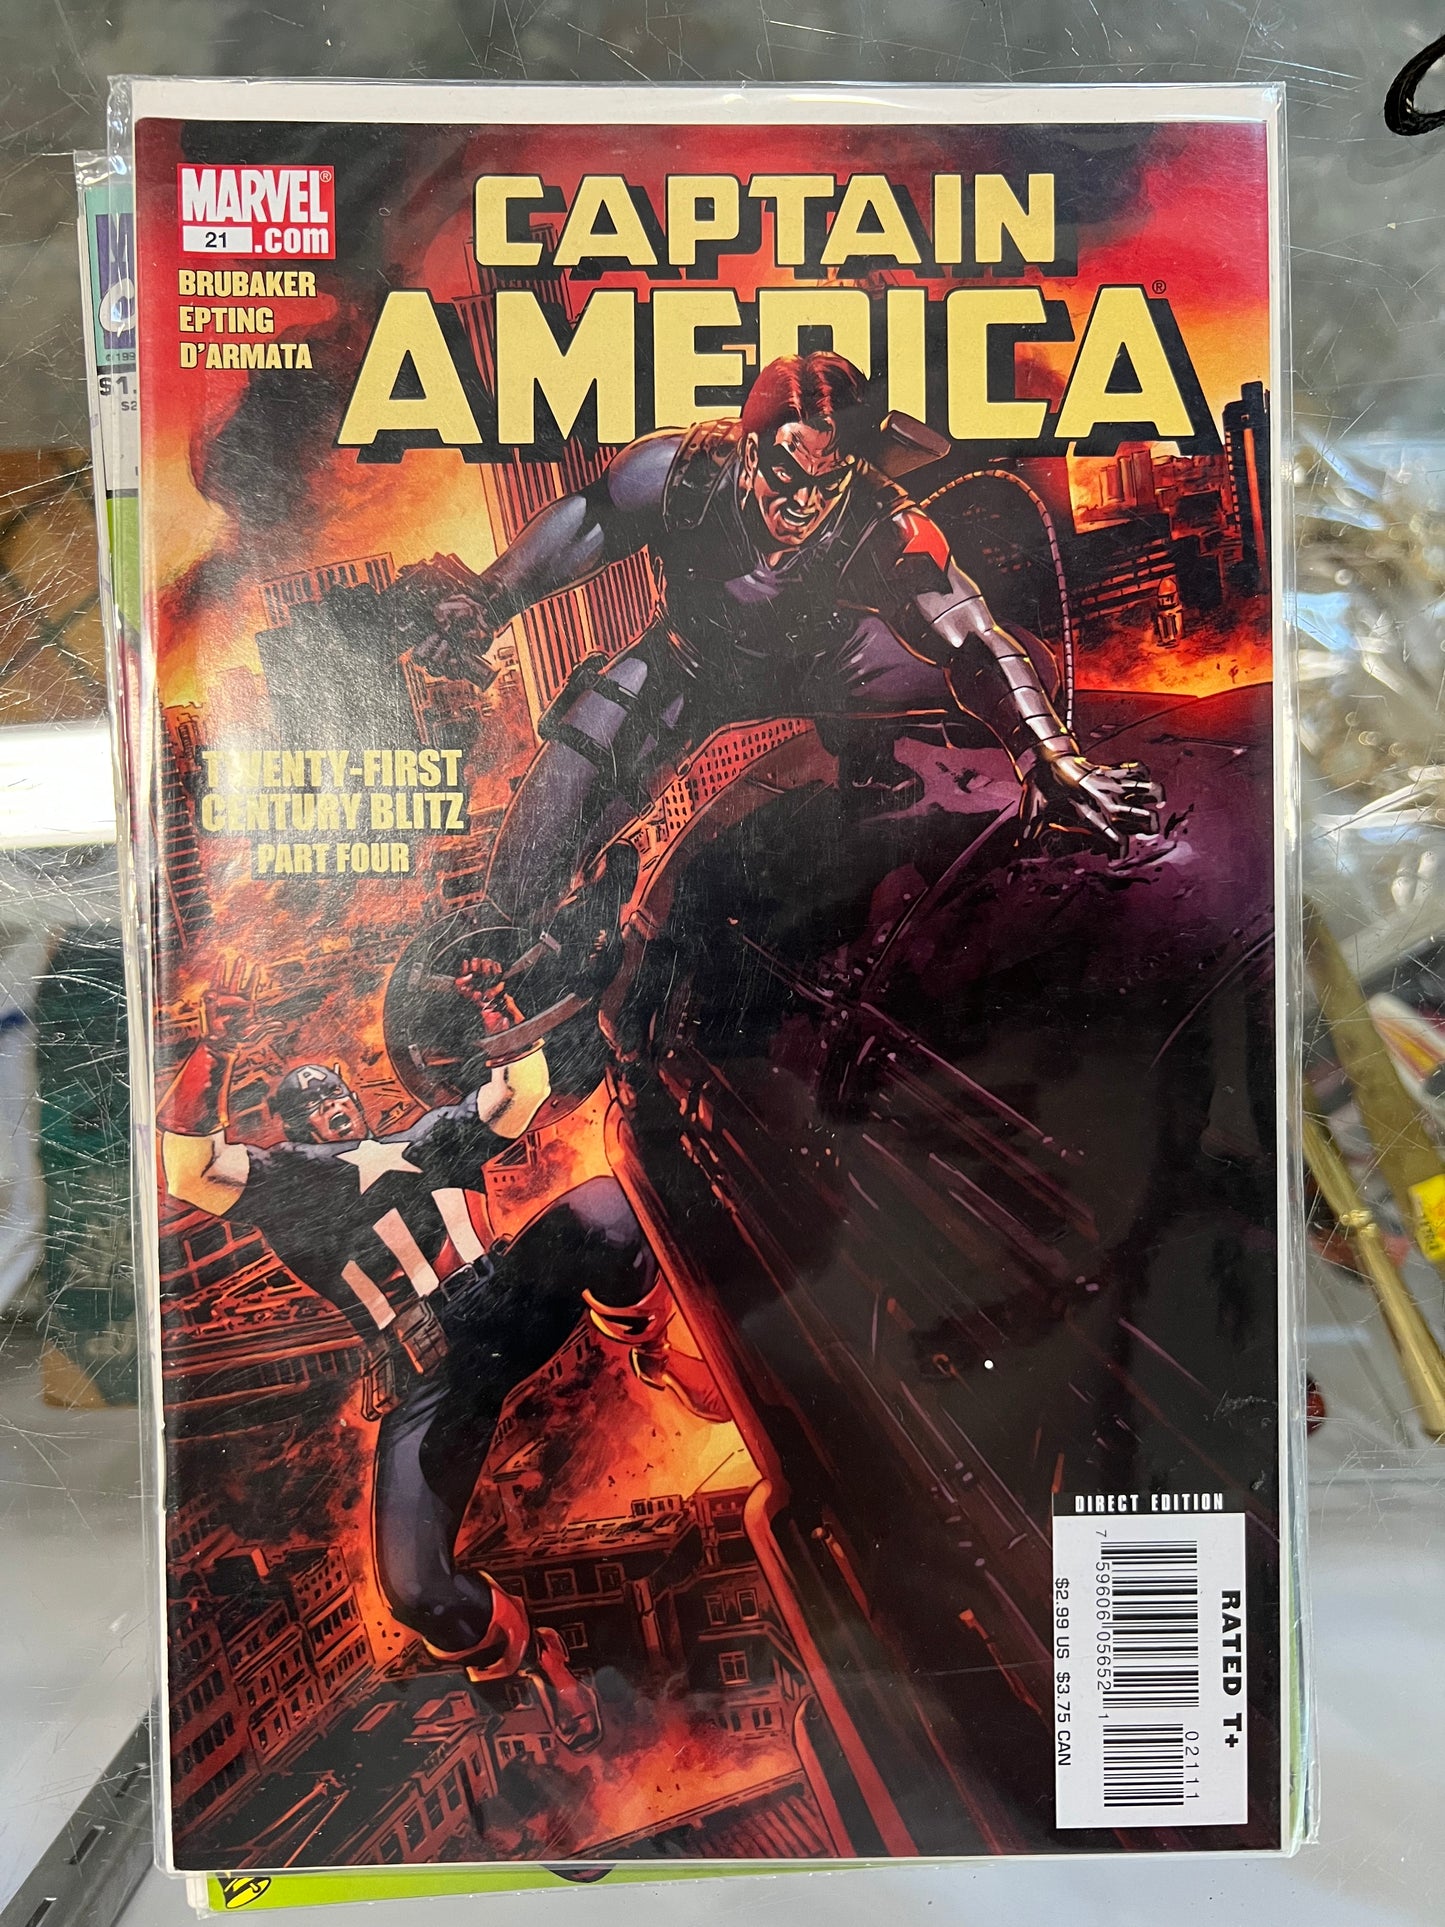 Marvel Comics #21 Captain America Twenty-First Century Blitz Part Four